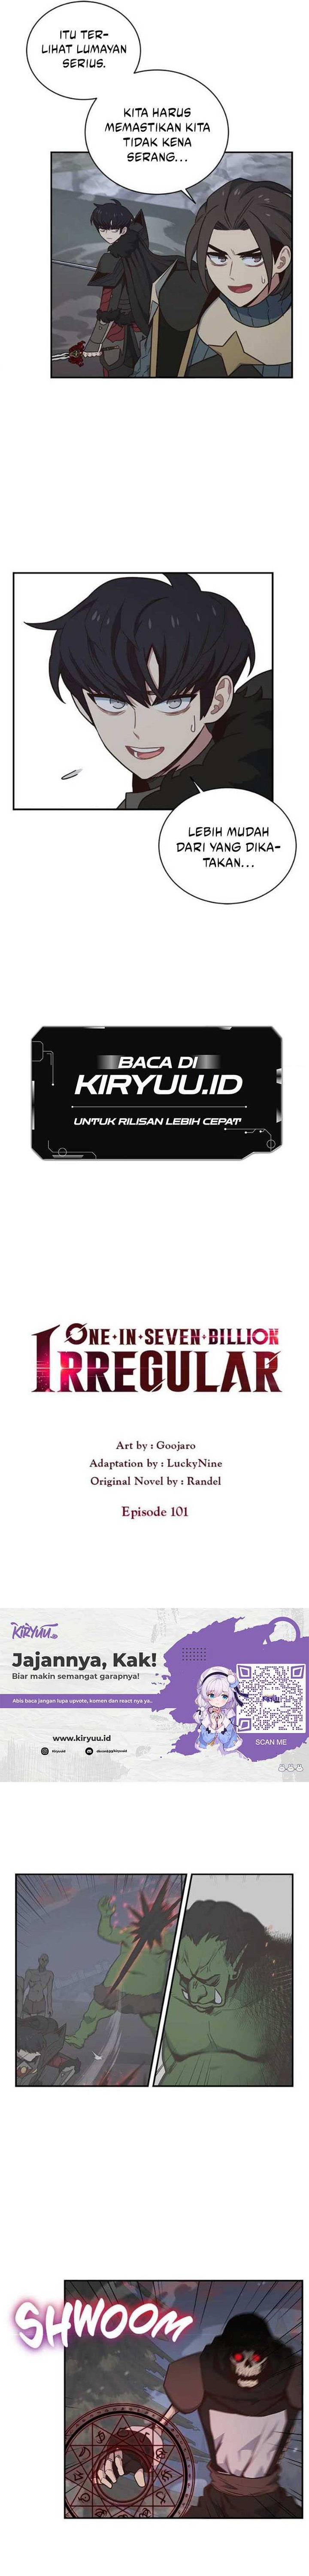 Irregular Of 1 In 7 Billion Chapter 101